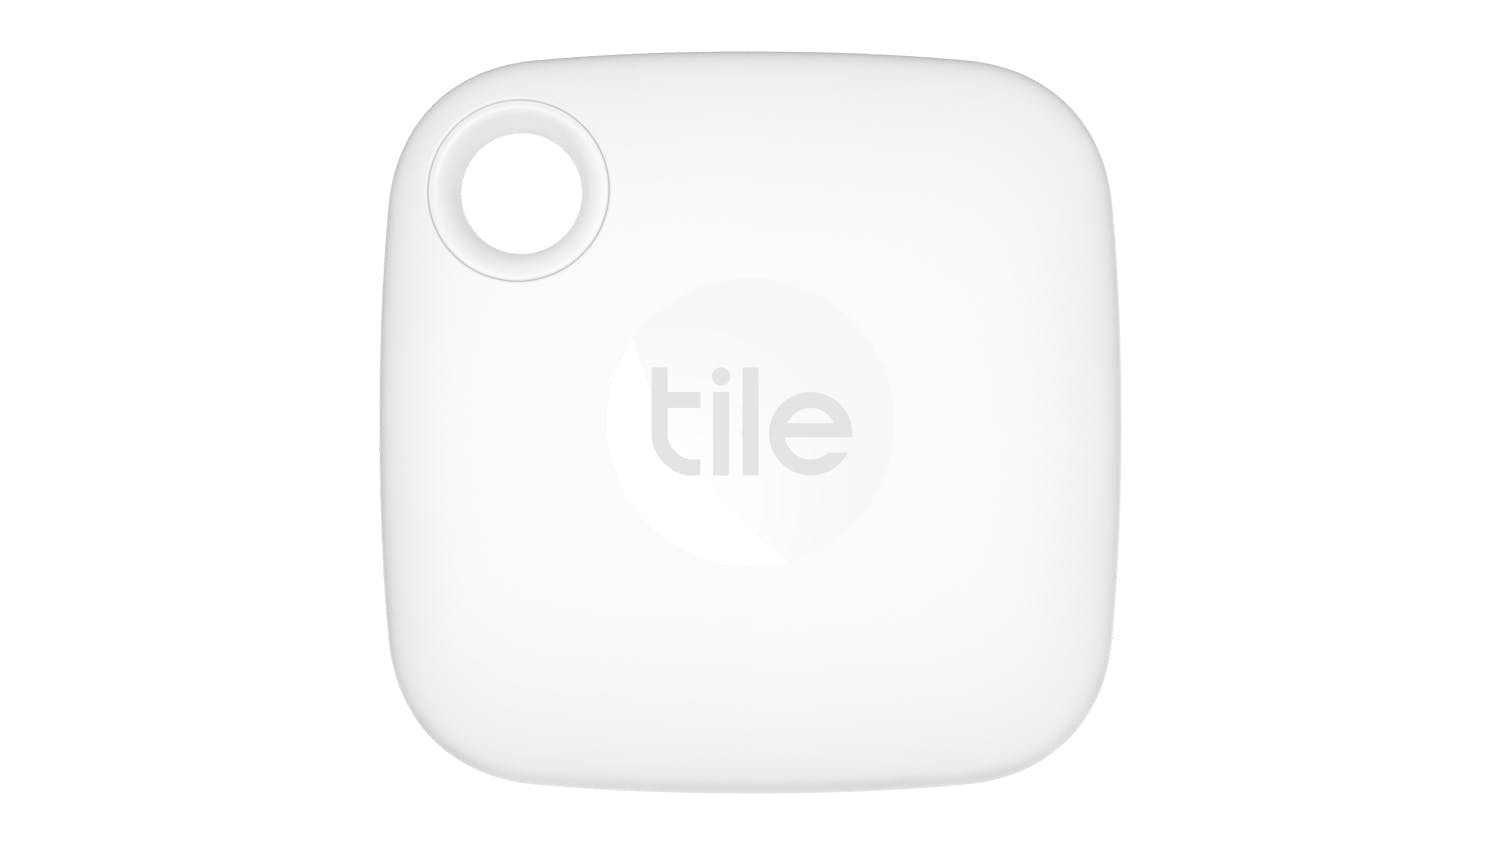 Tile Mate Bluetooth Tracker (2022, White)